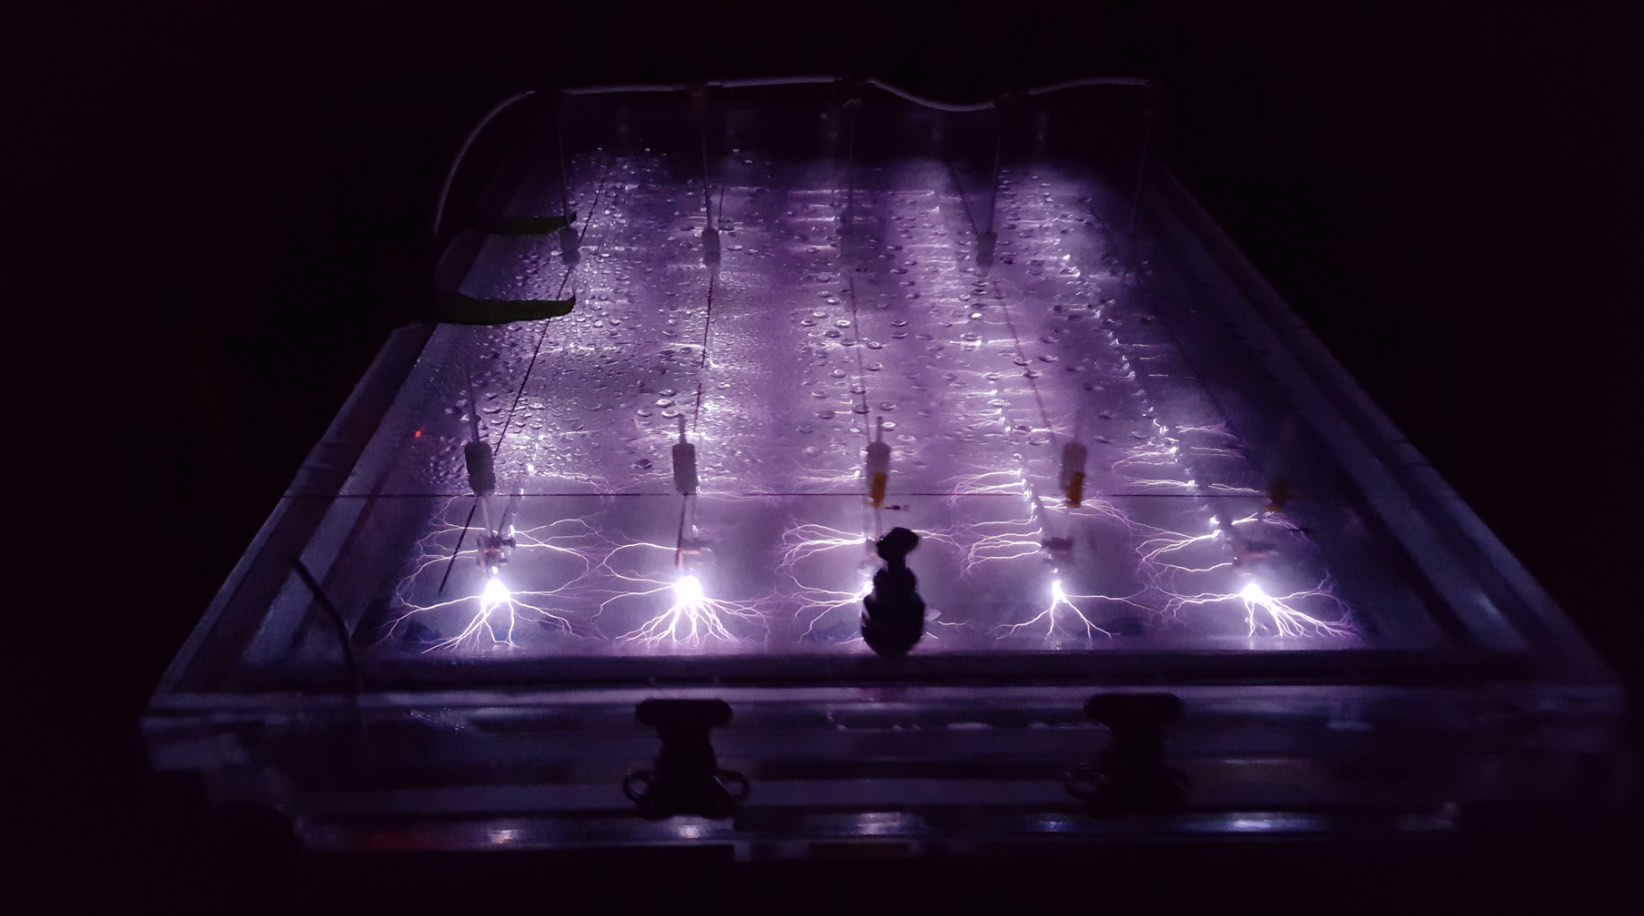 Plasma in a tray, inside of a dark room